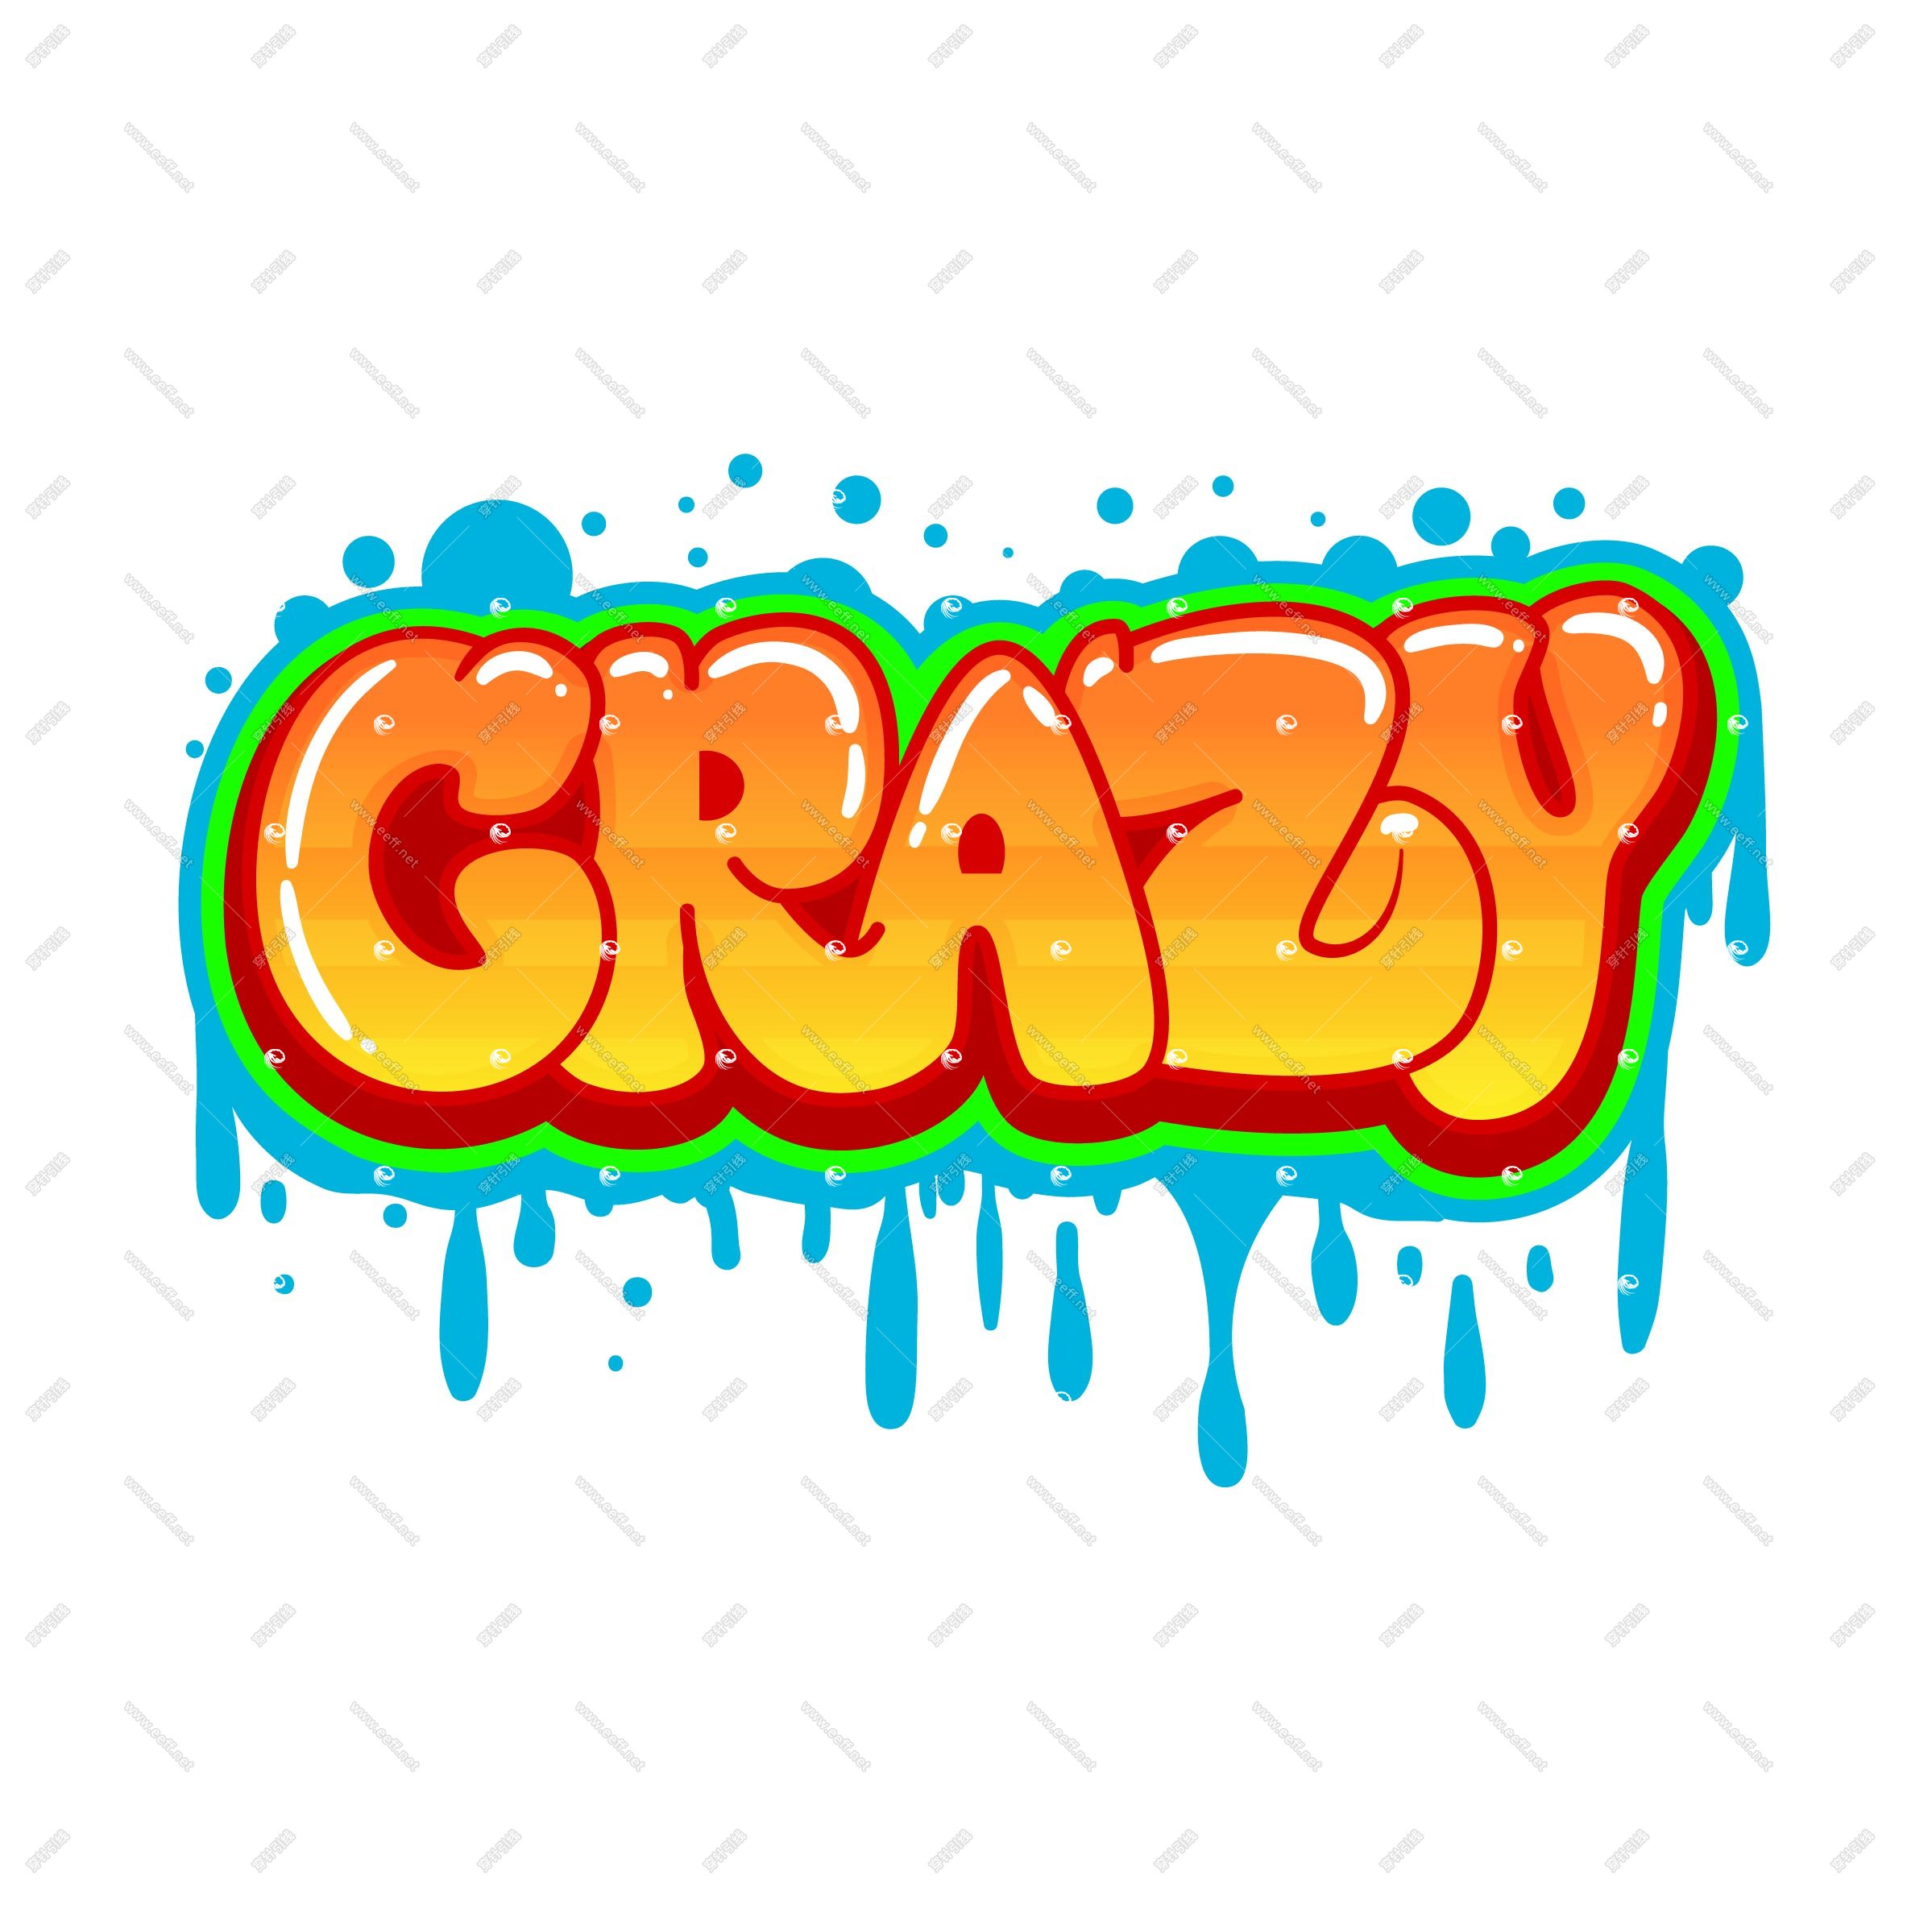 Crazy-1